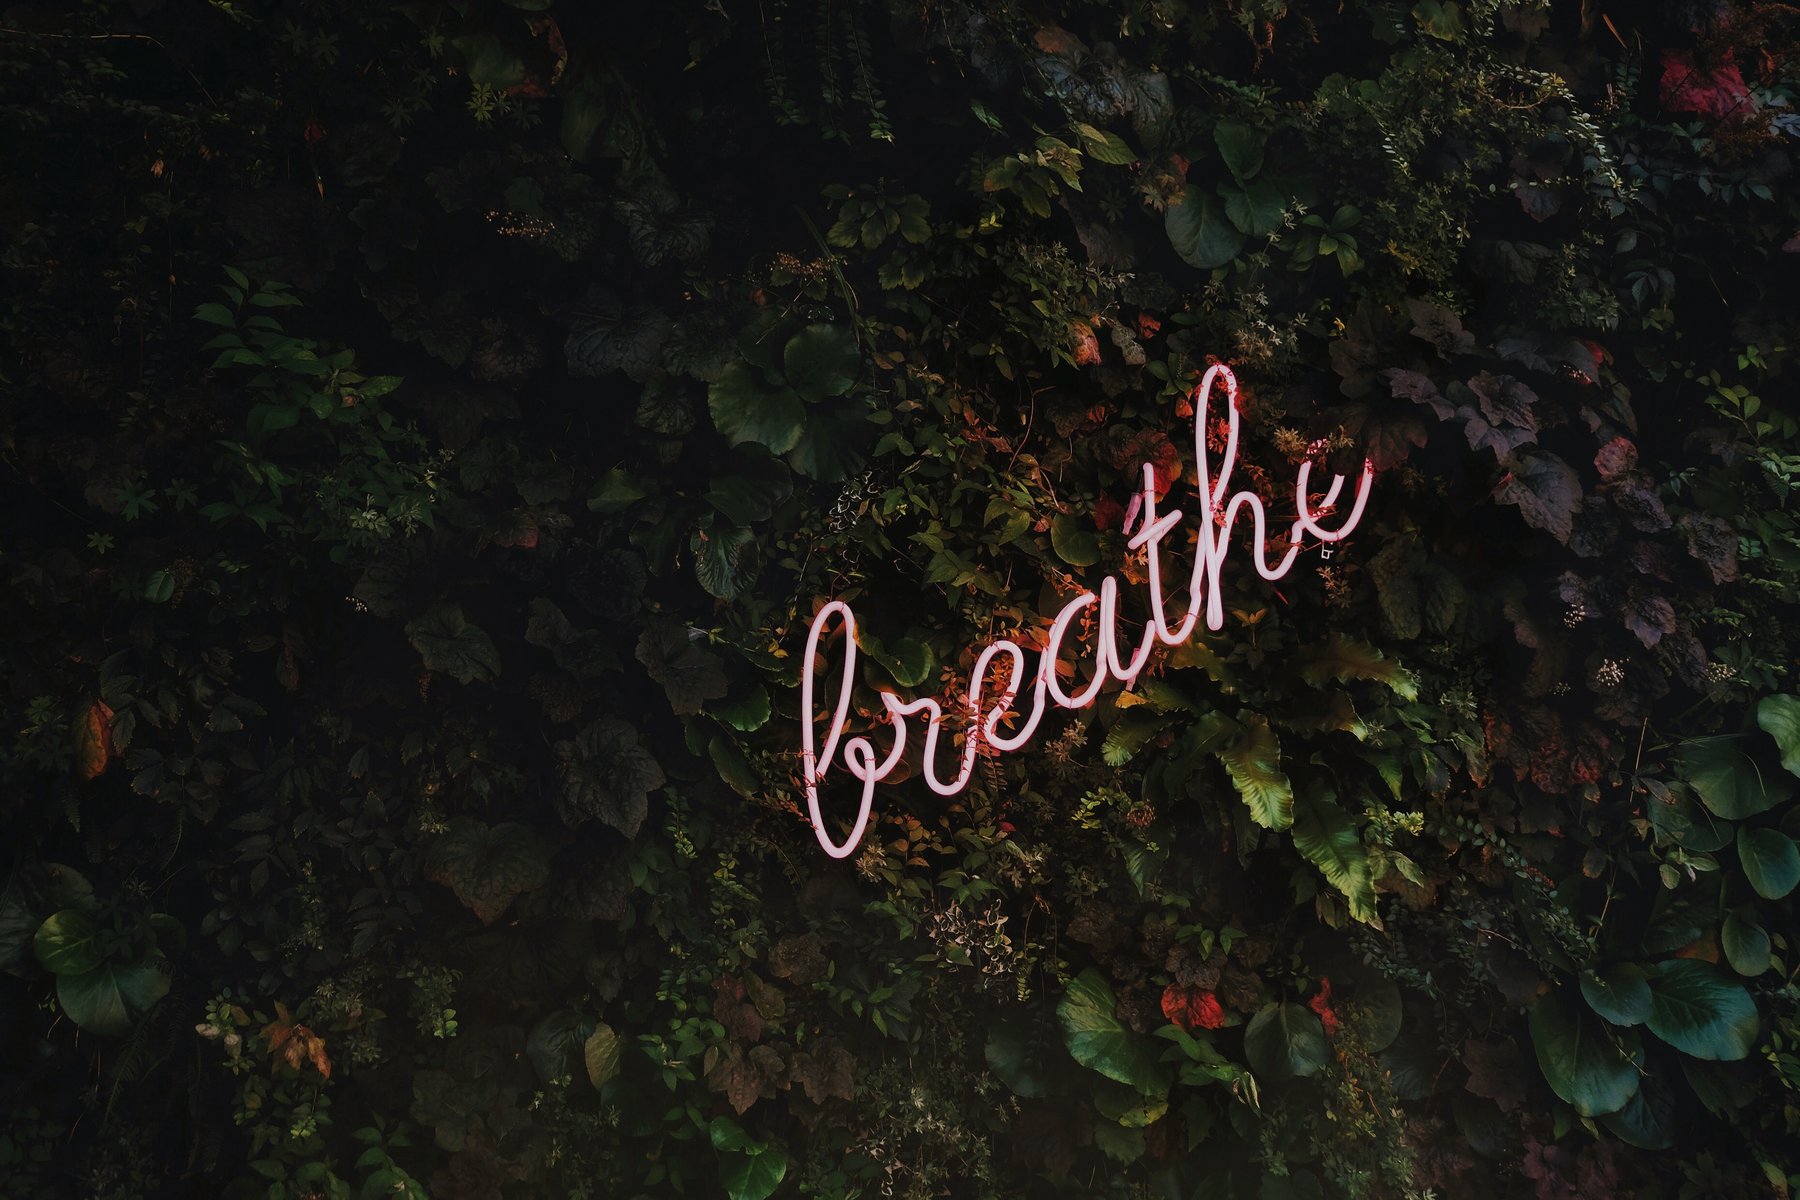 Just breath